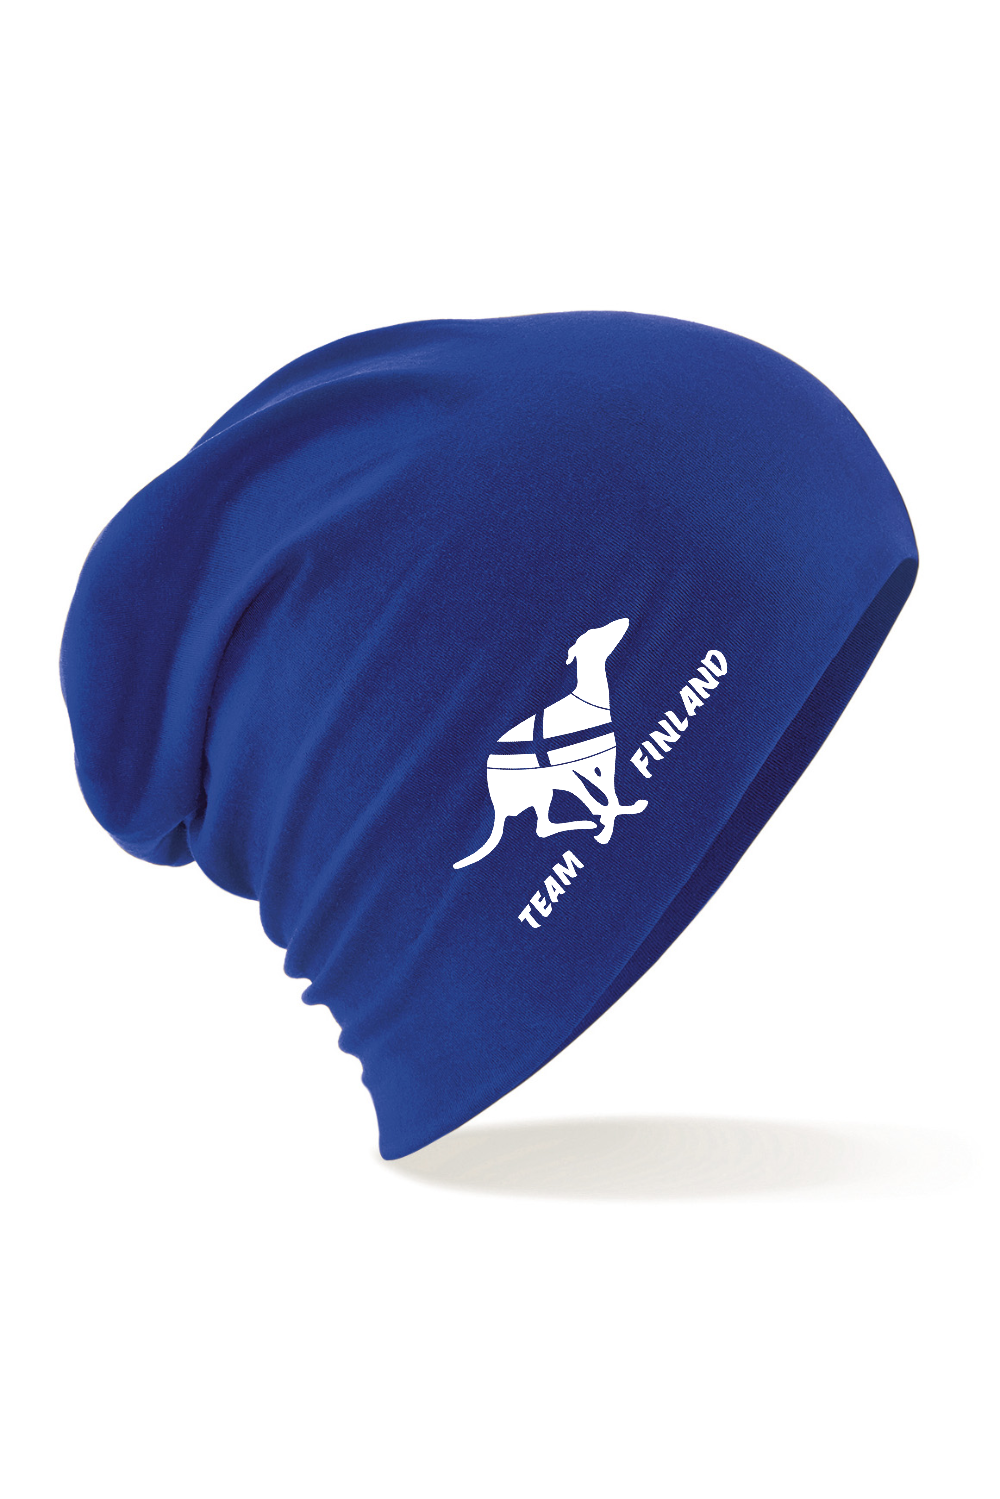 Royal blue Team Finland logo